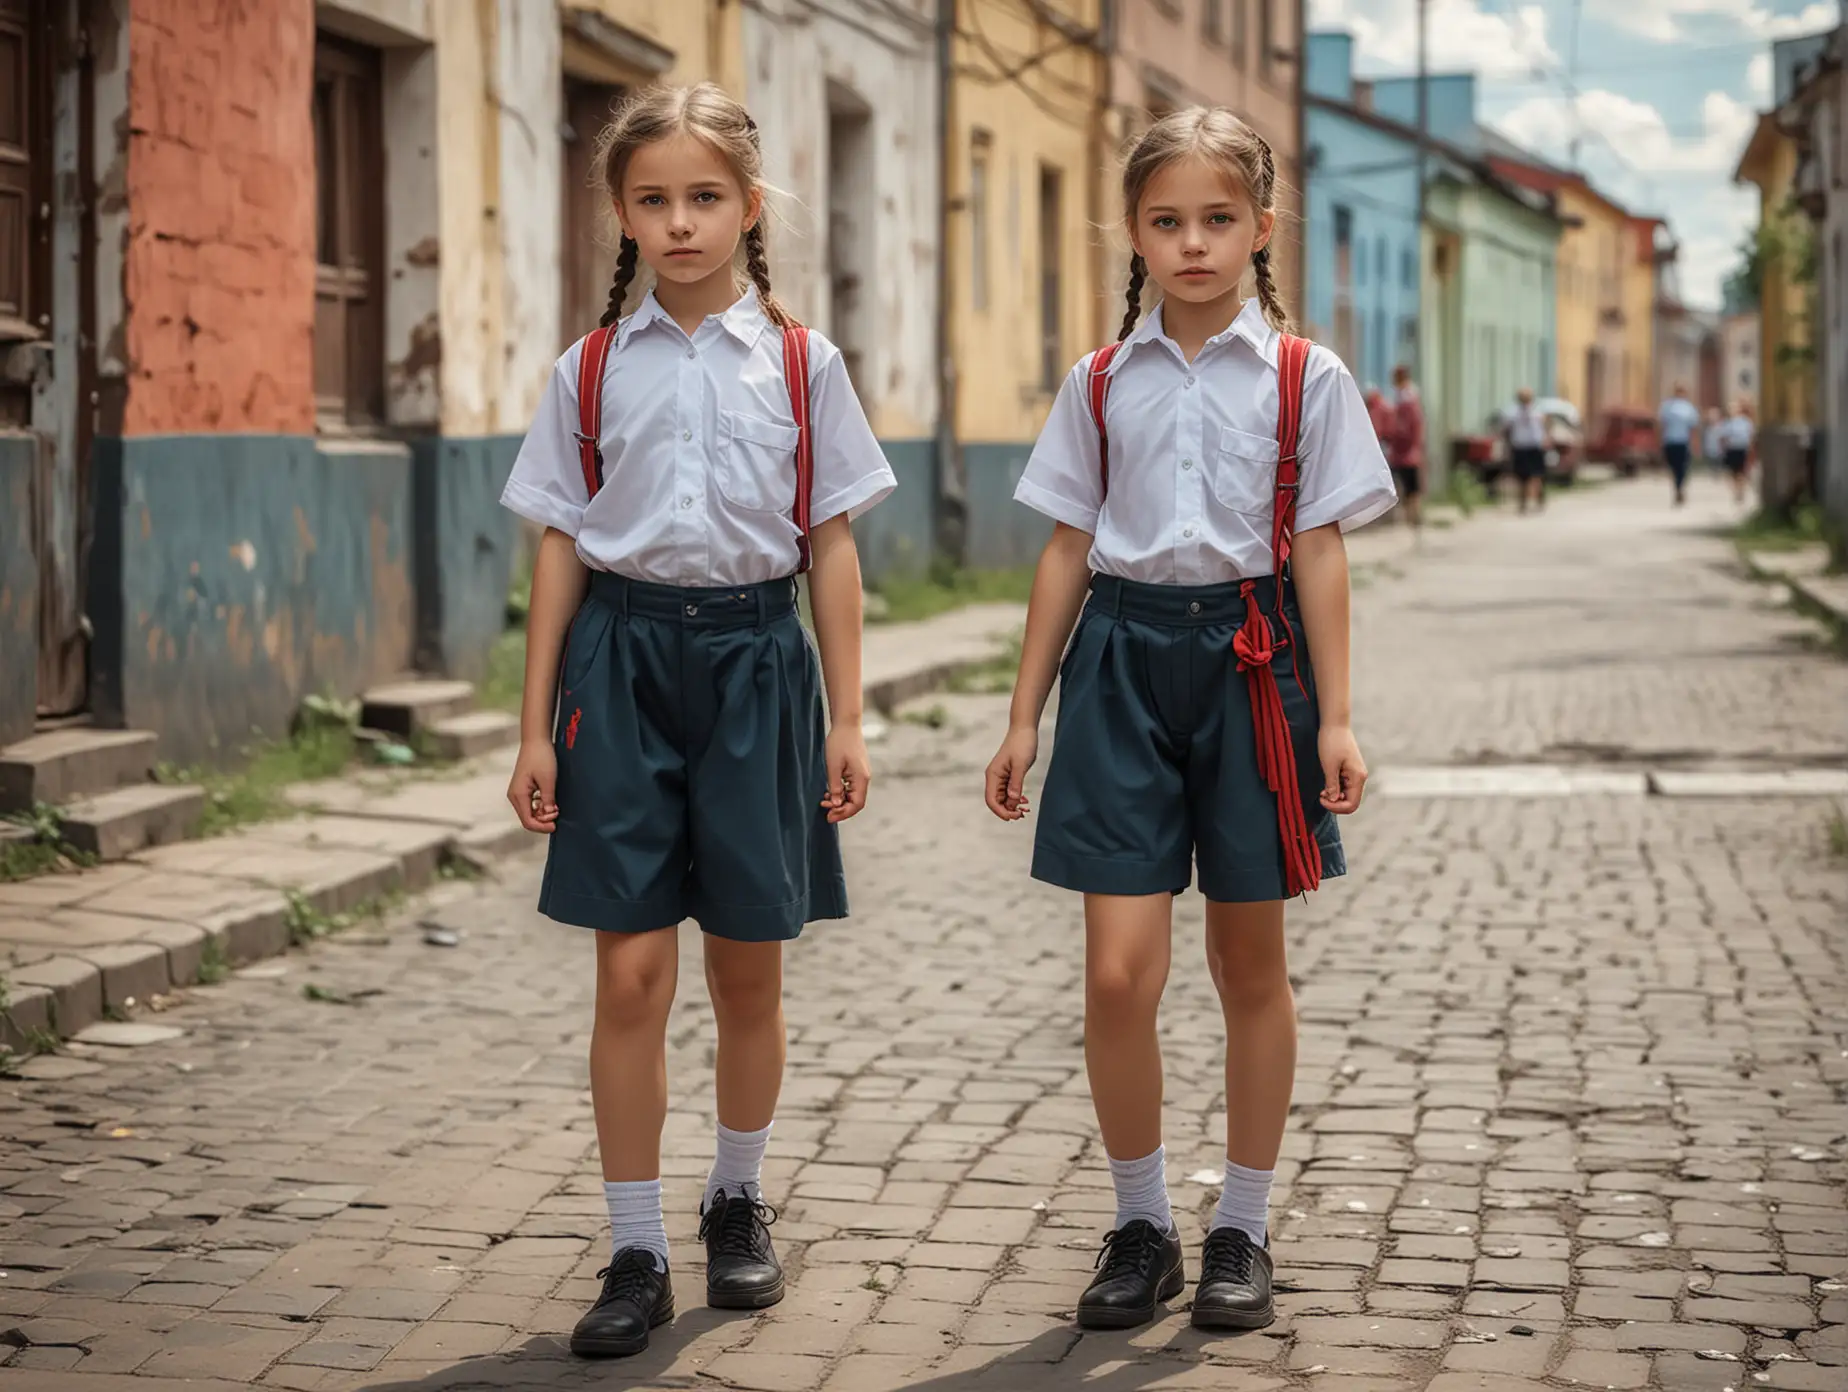 Children-Wearing-USSR-School-Uniforms-on-Summer-Day-Street-Scene